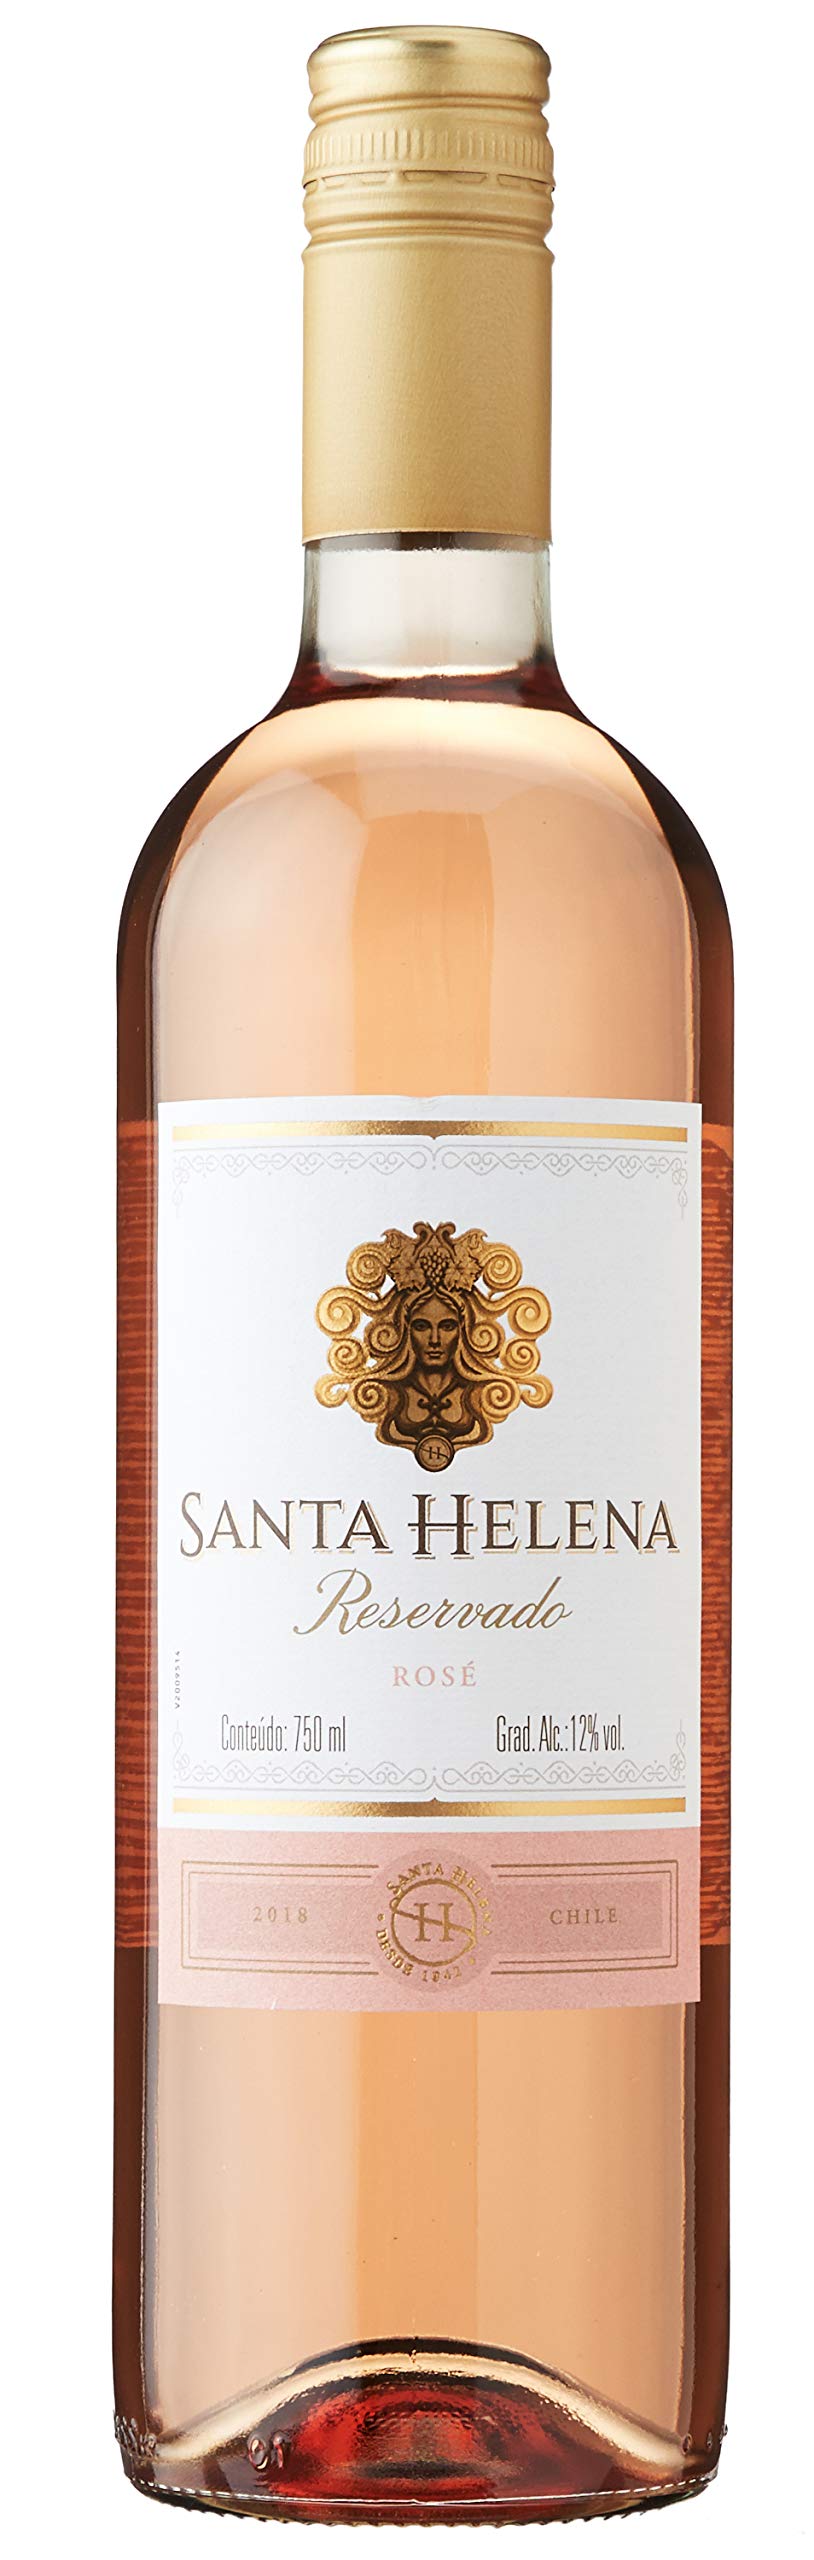 Vinho Santa Helena Reservado Rose 750Ml
